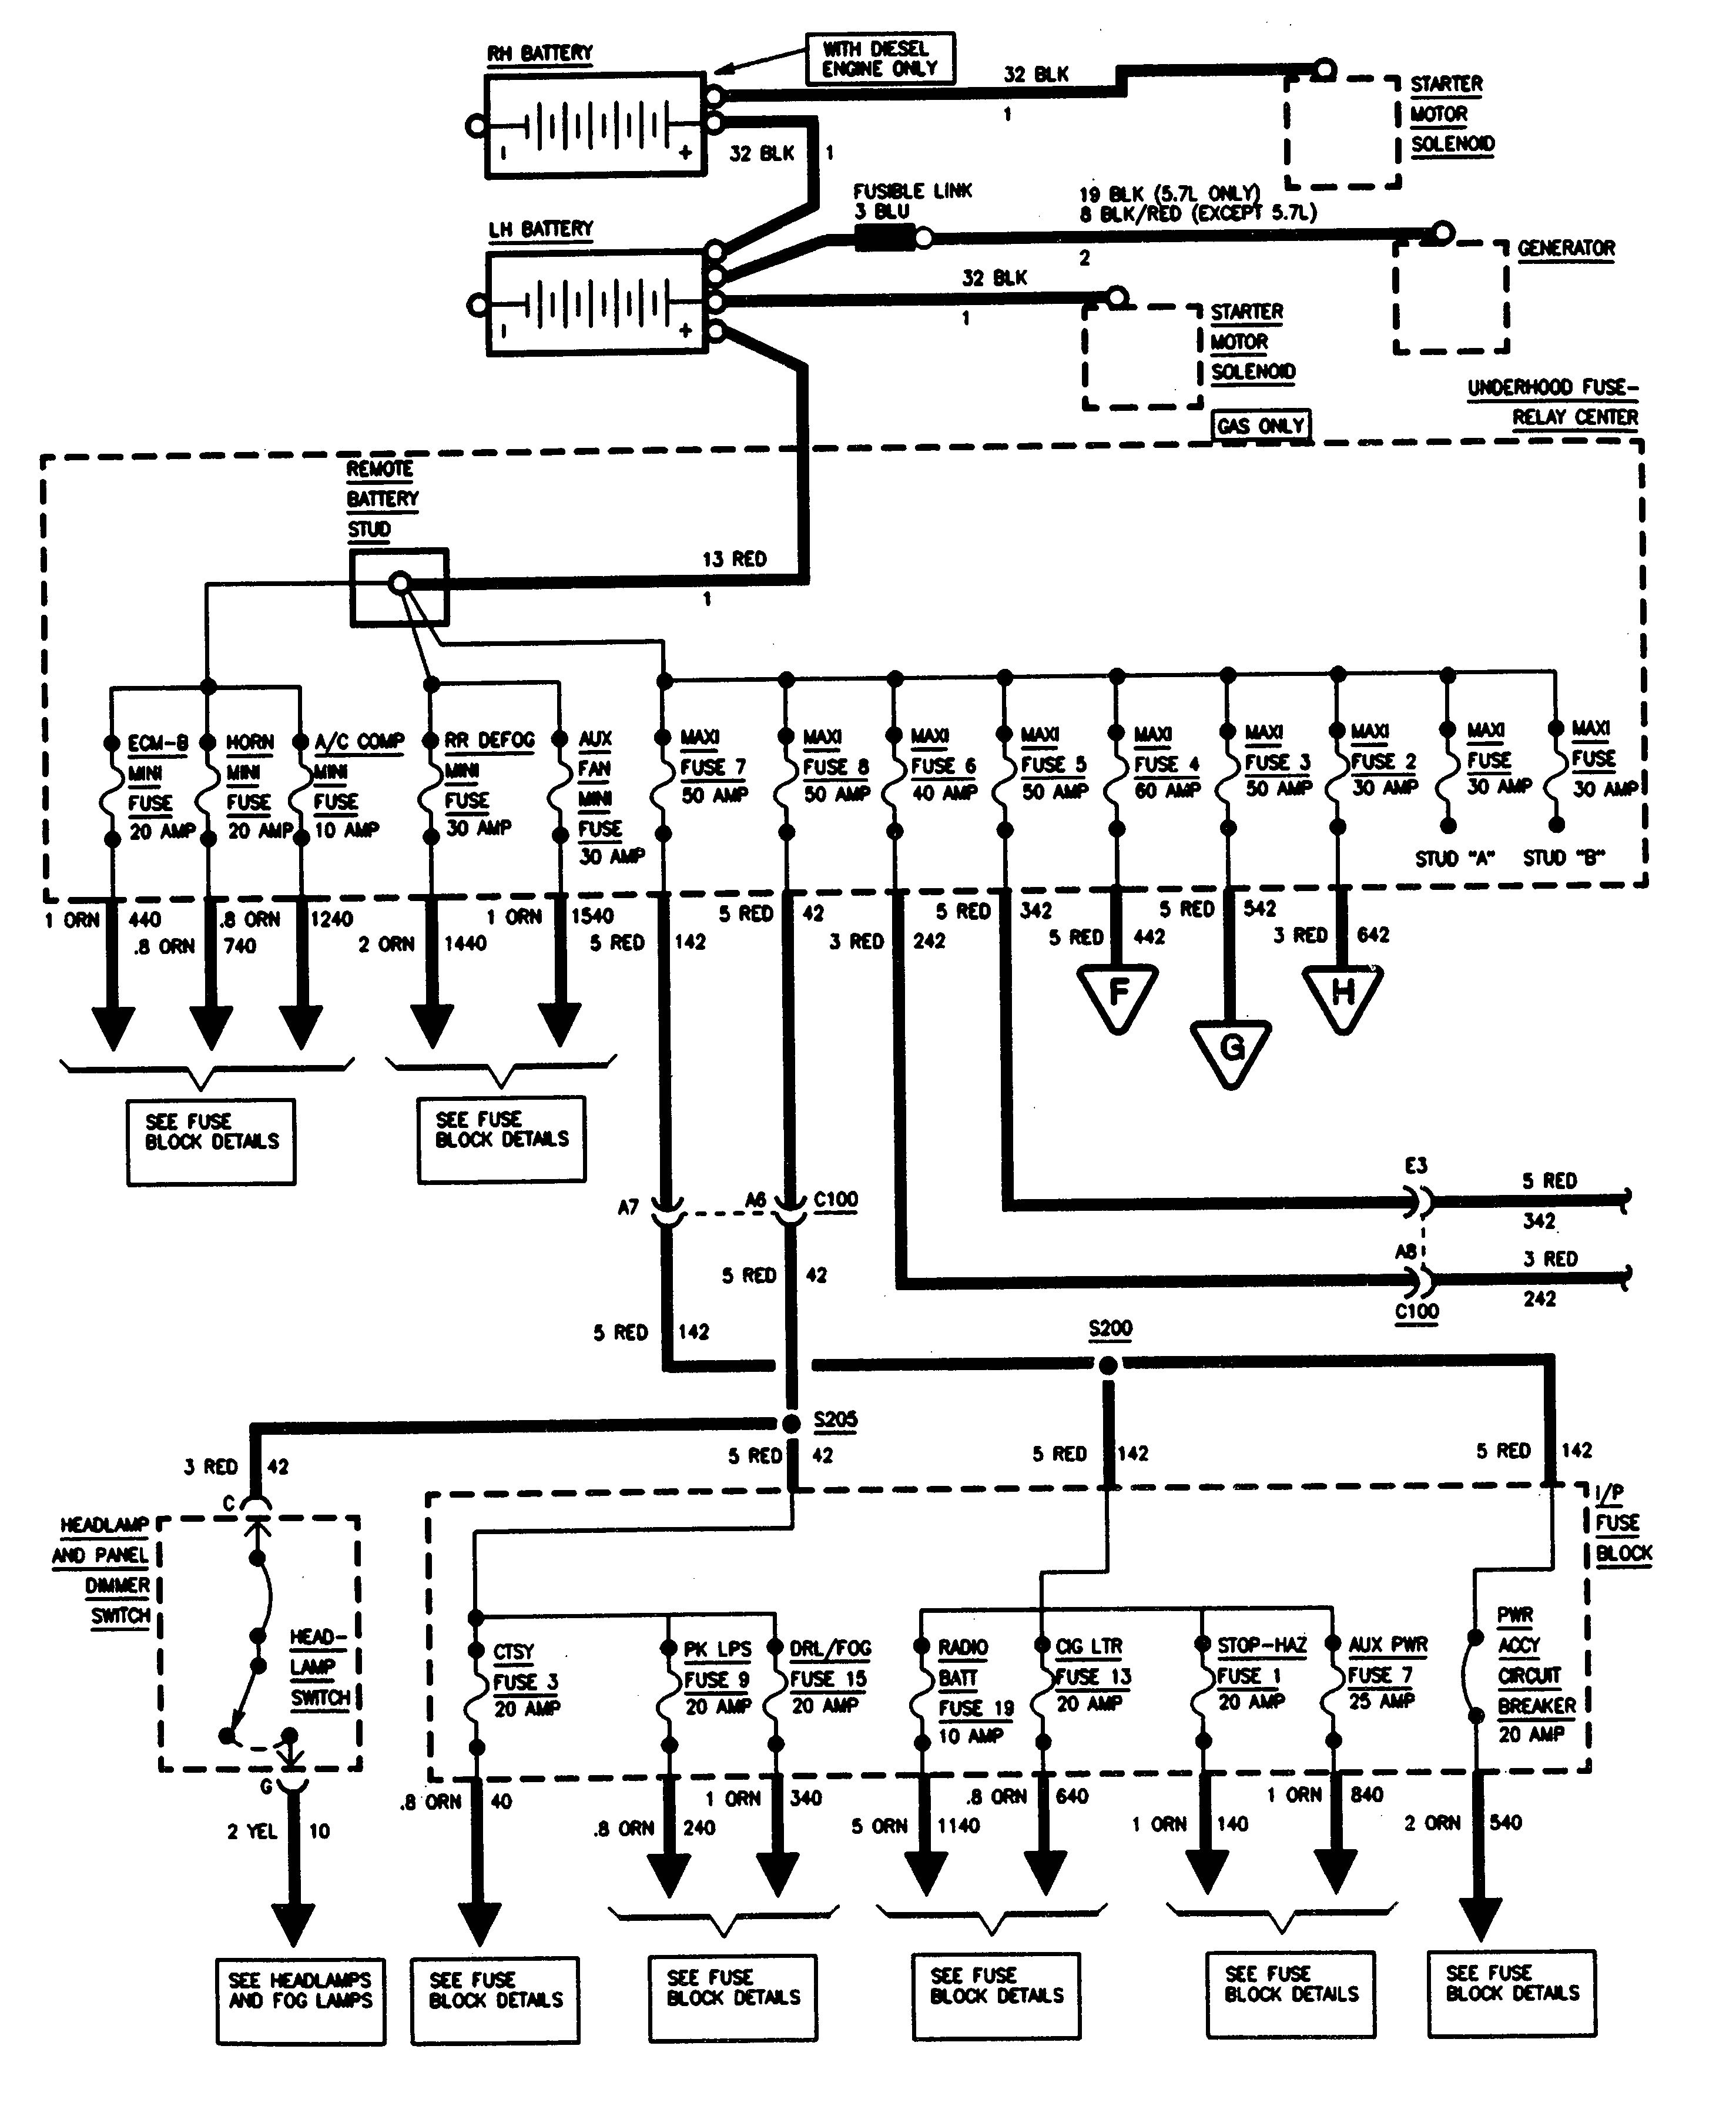 sierra gmc gmc truck wiring diagrams